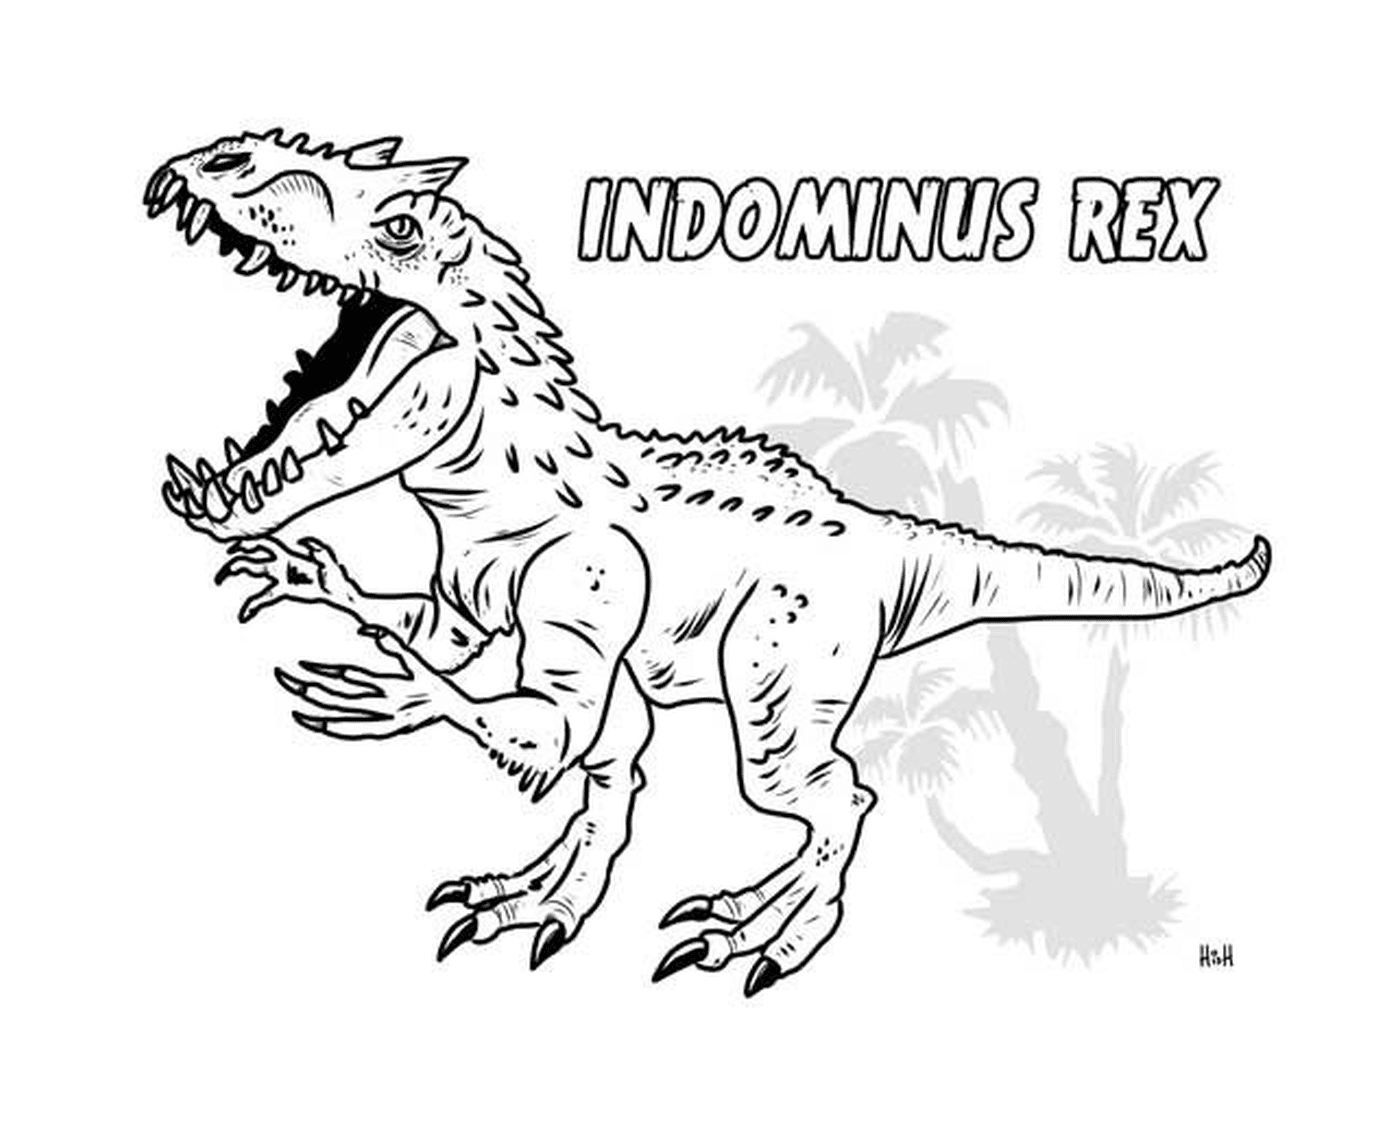  Indominus Rex, peligroso mundo jurásico 